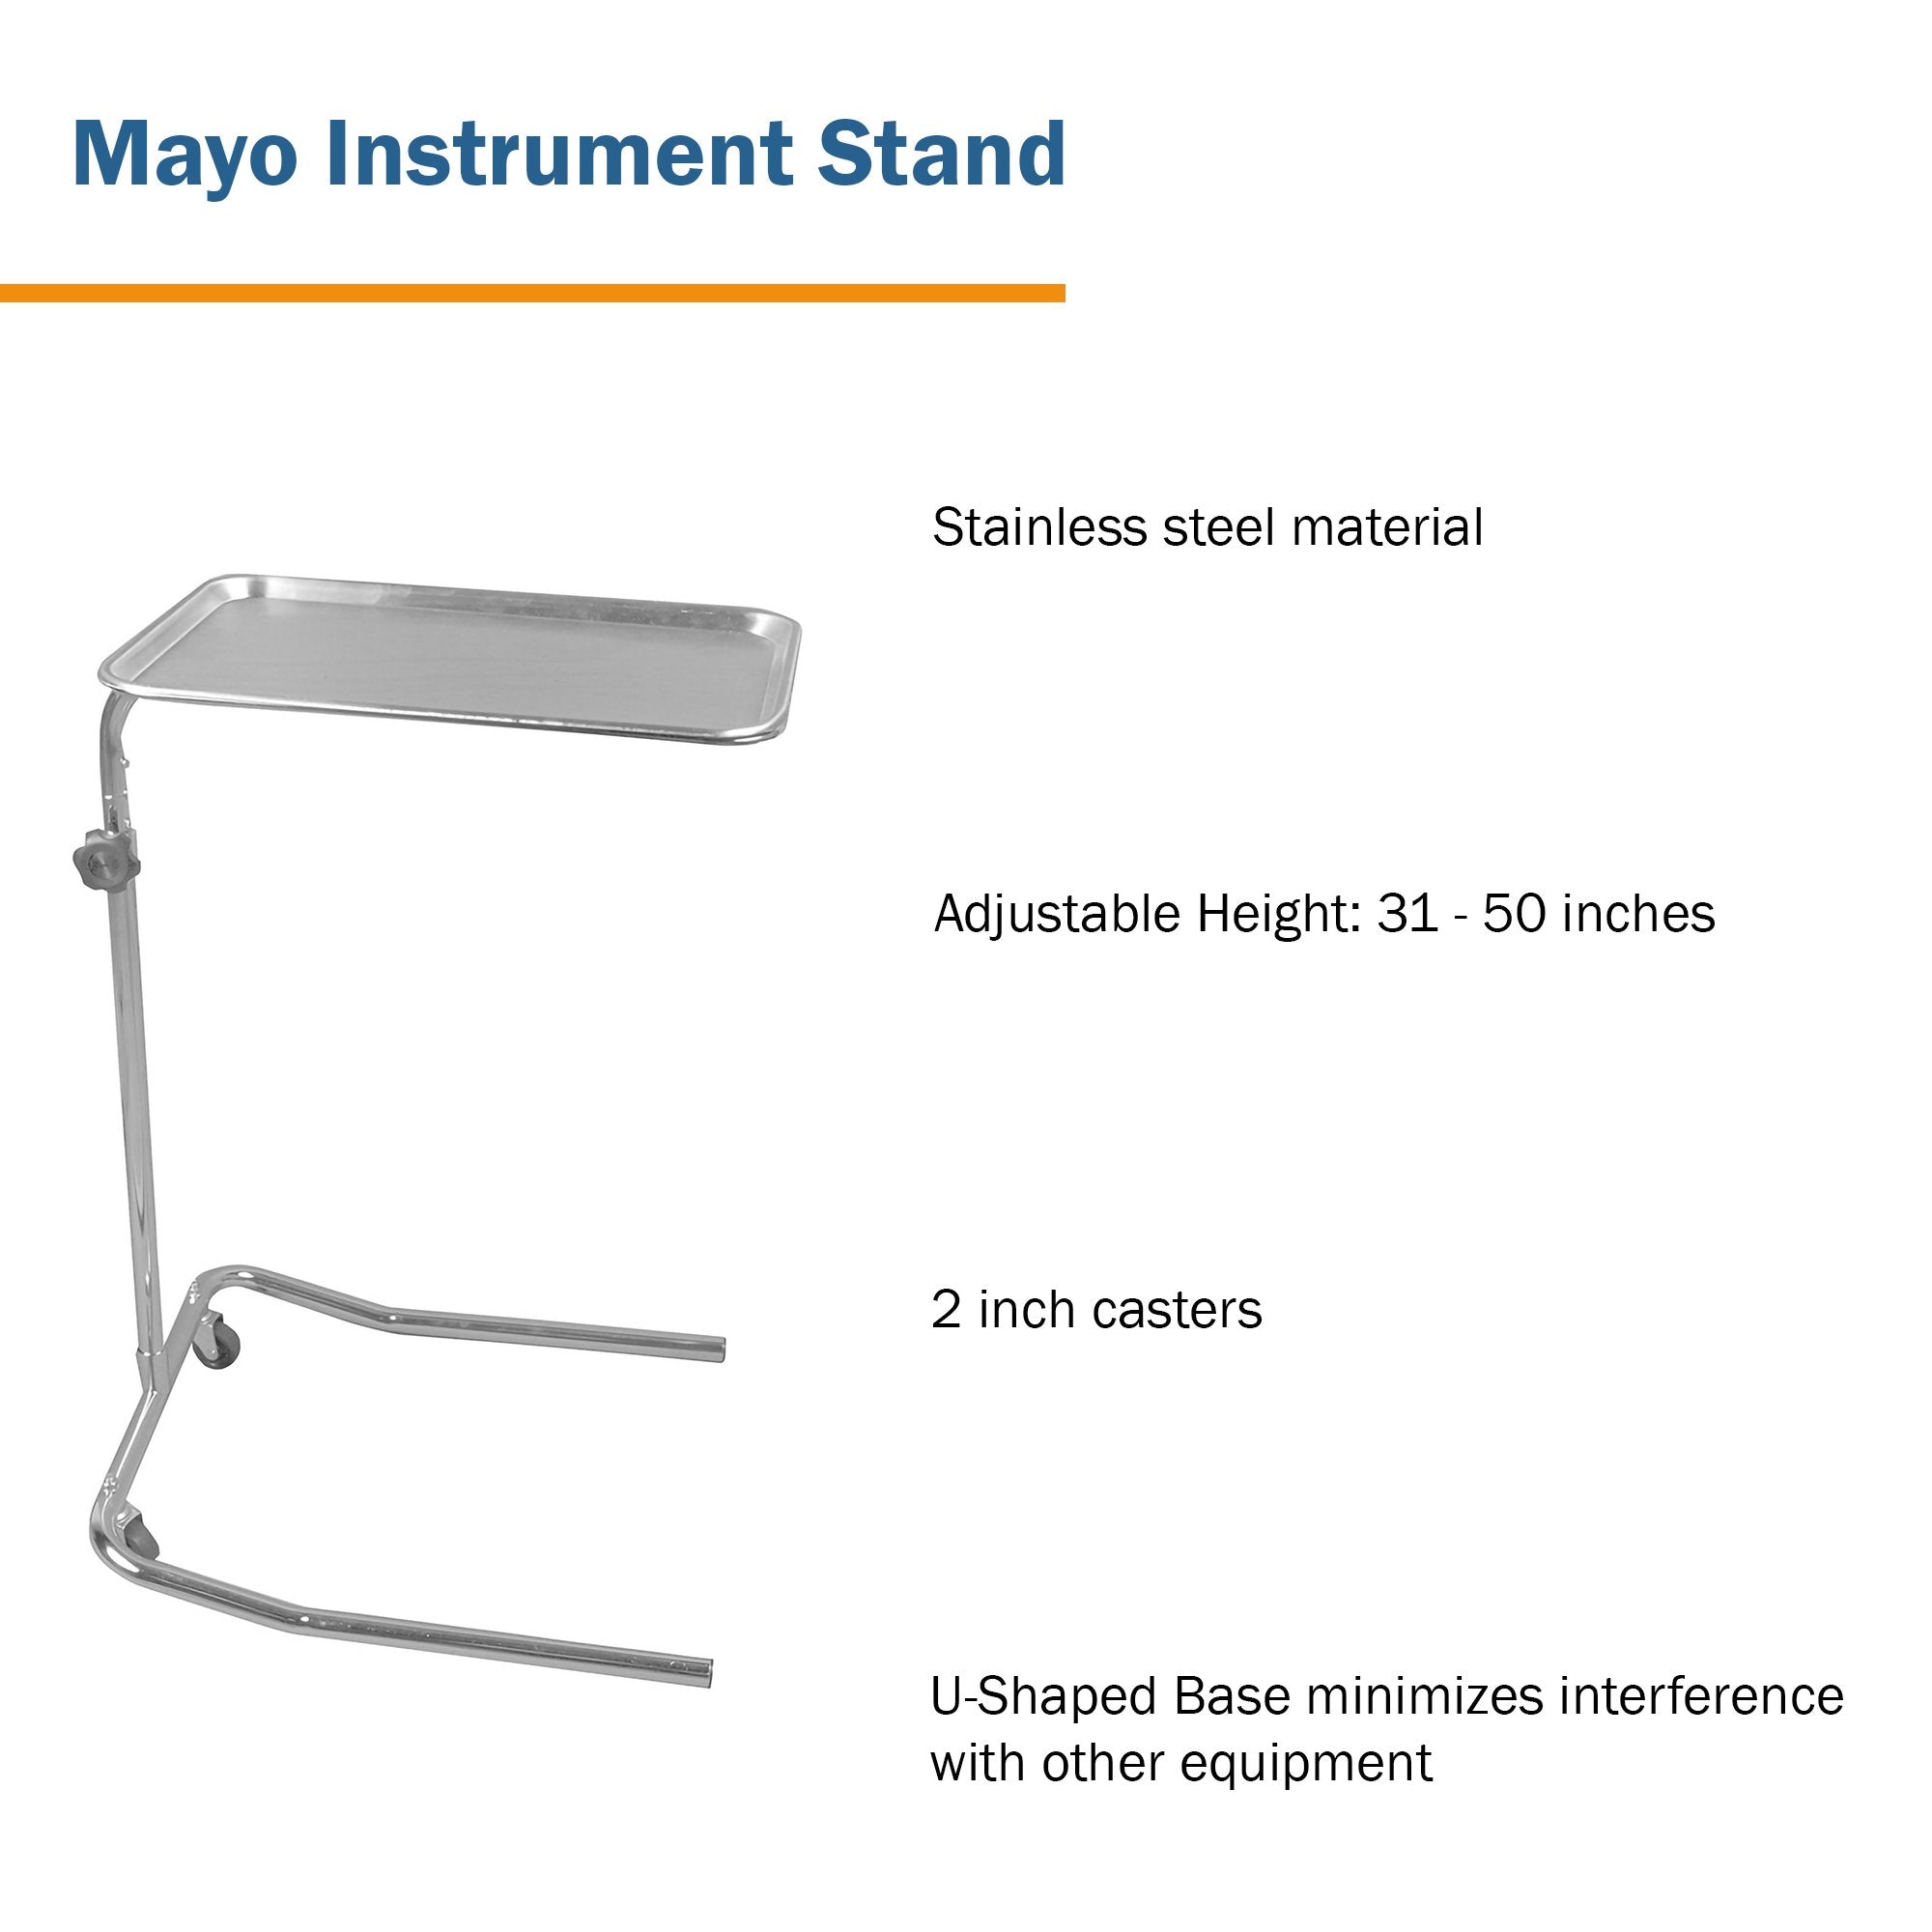 Mayo Instrument Stand Mayo 11 lb Weight Capacity Tray U-Shaped Base 31 - 50 Inch 19 Inch